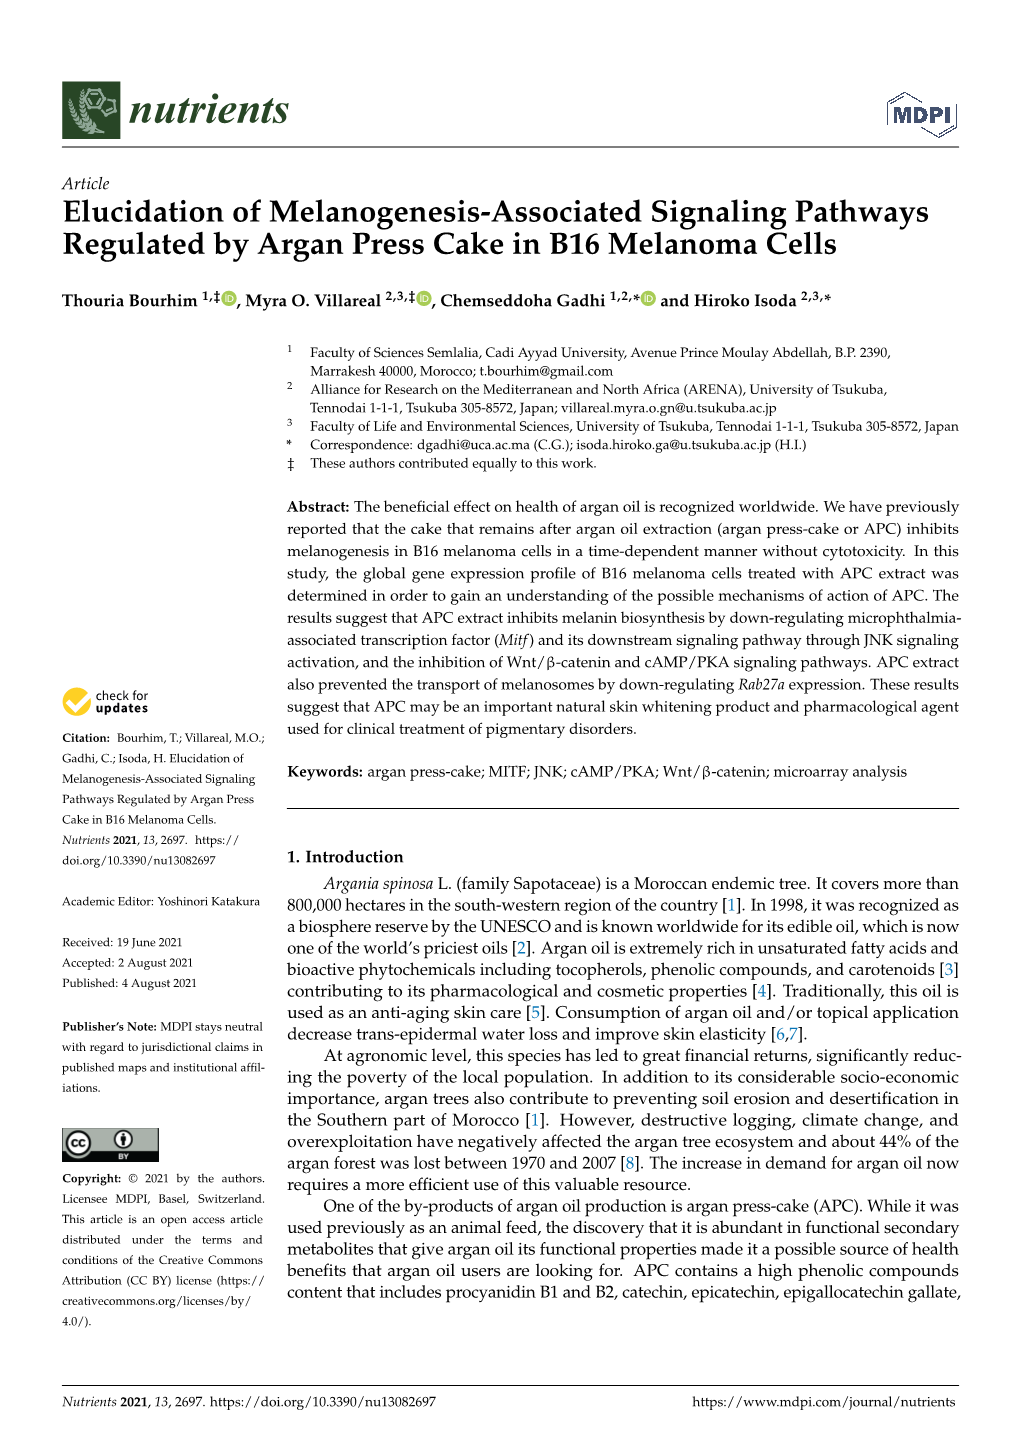 Elucidation of Melanogenesis-Associated Signaling Pathways Regulated by Argan Press Cake in B16 Melanoma Cells